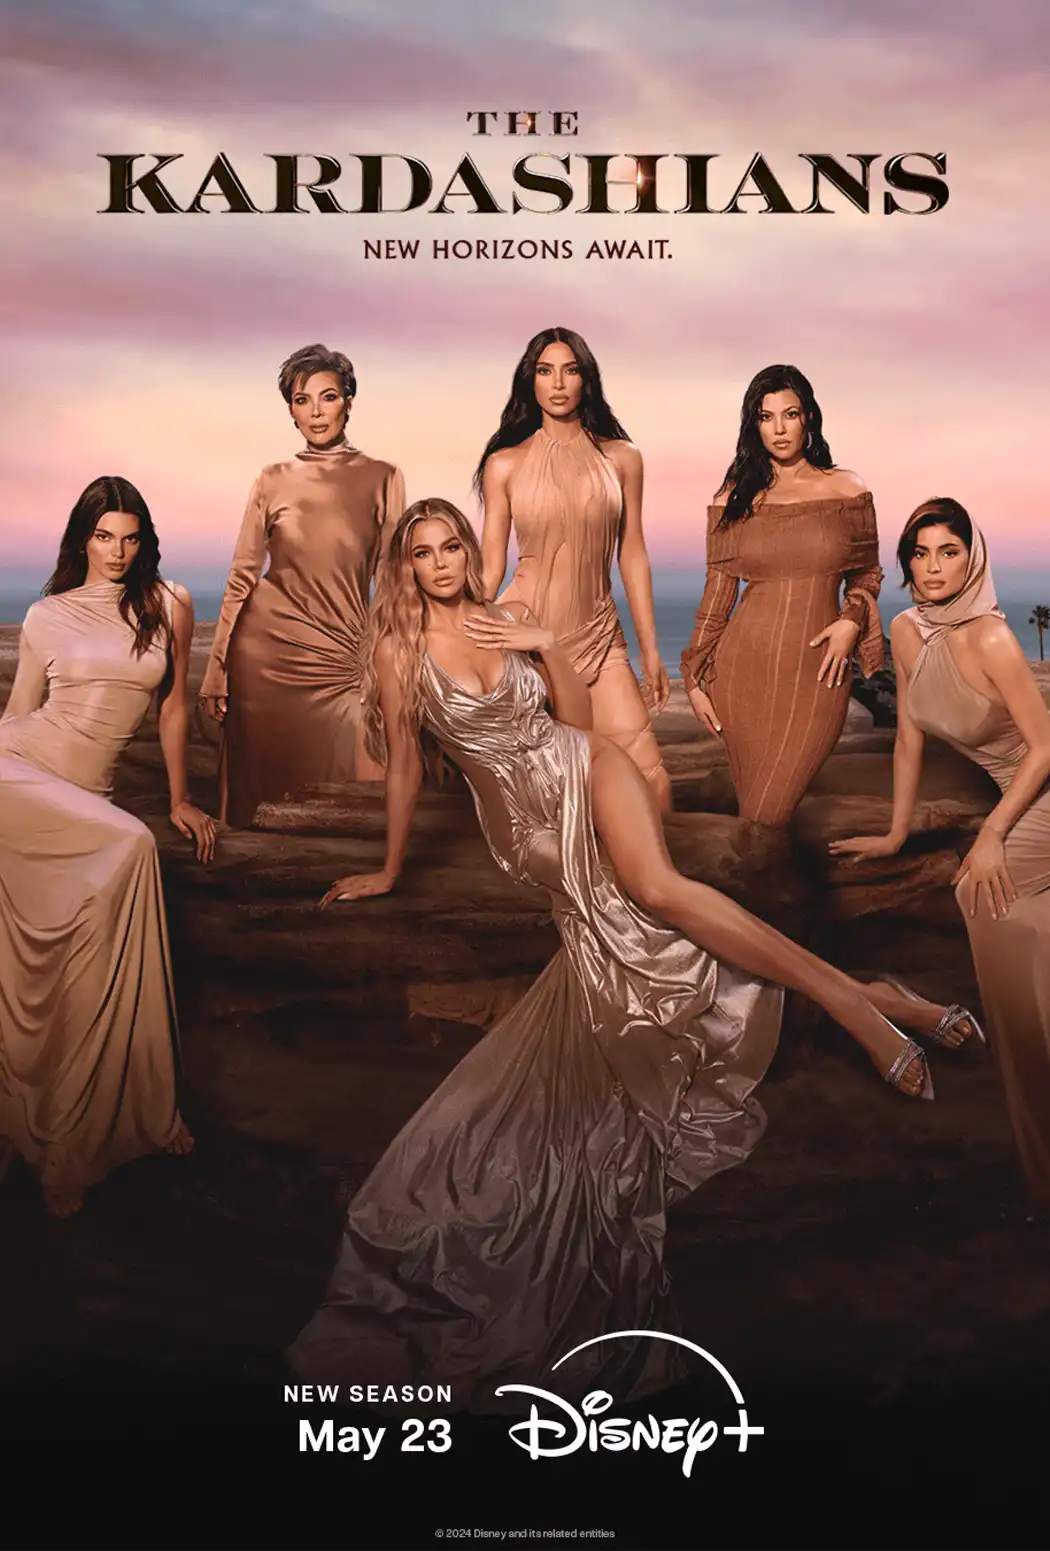 The Kardashians Season 5 Soundtrack